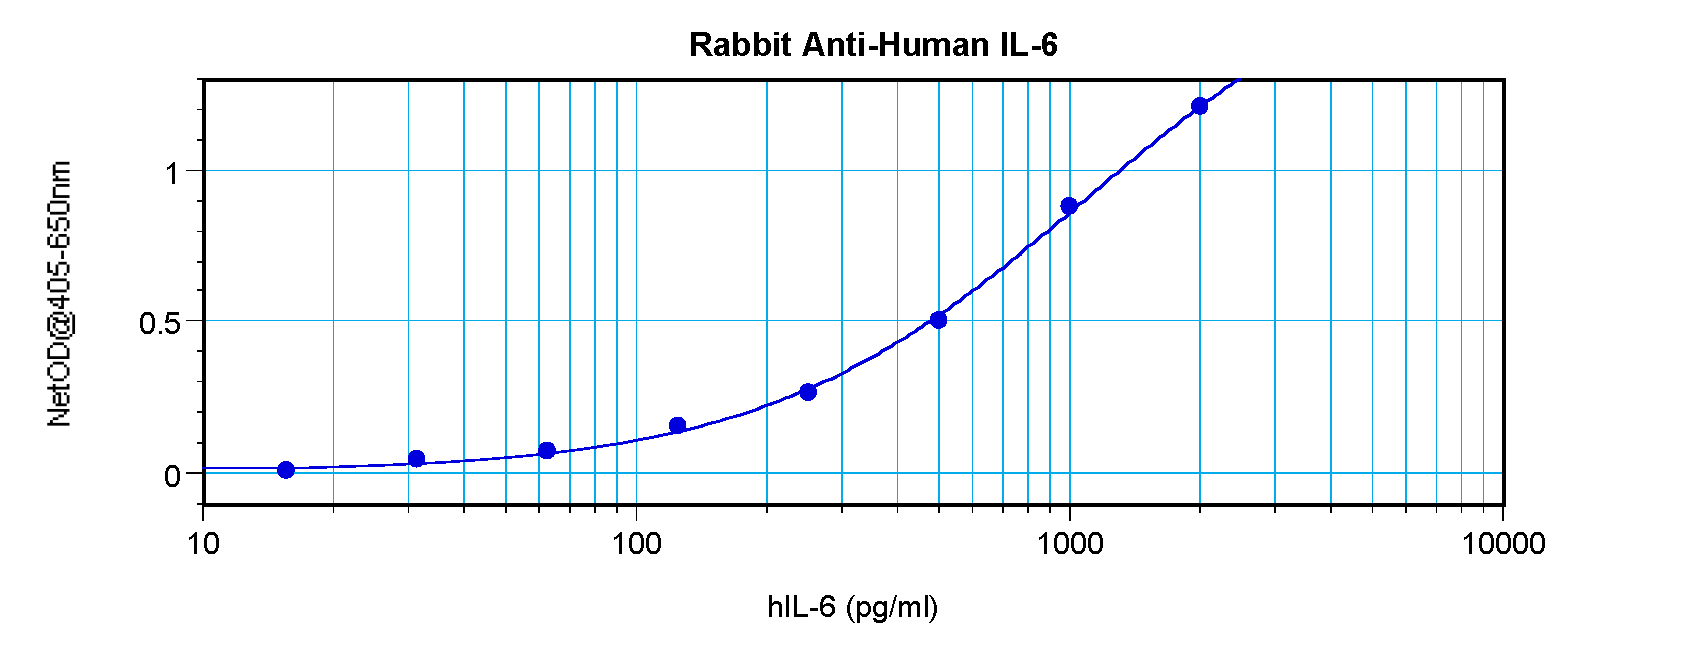 IL6 Antibody